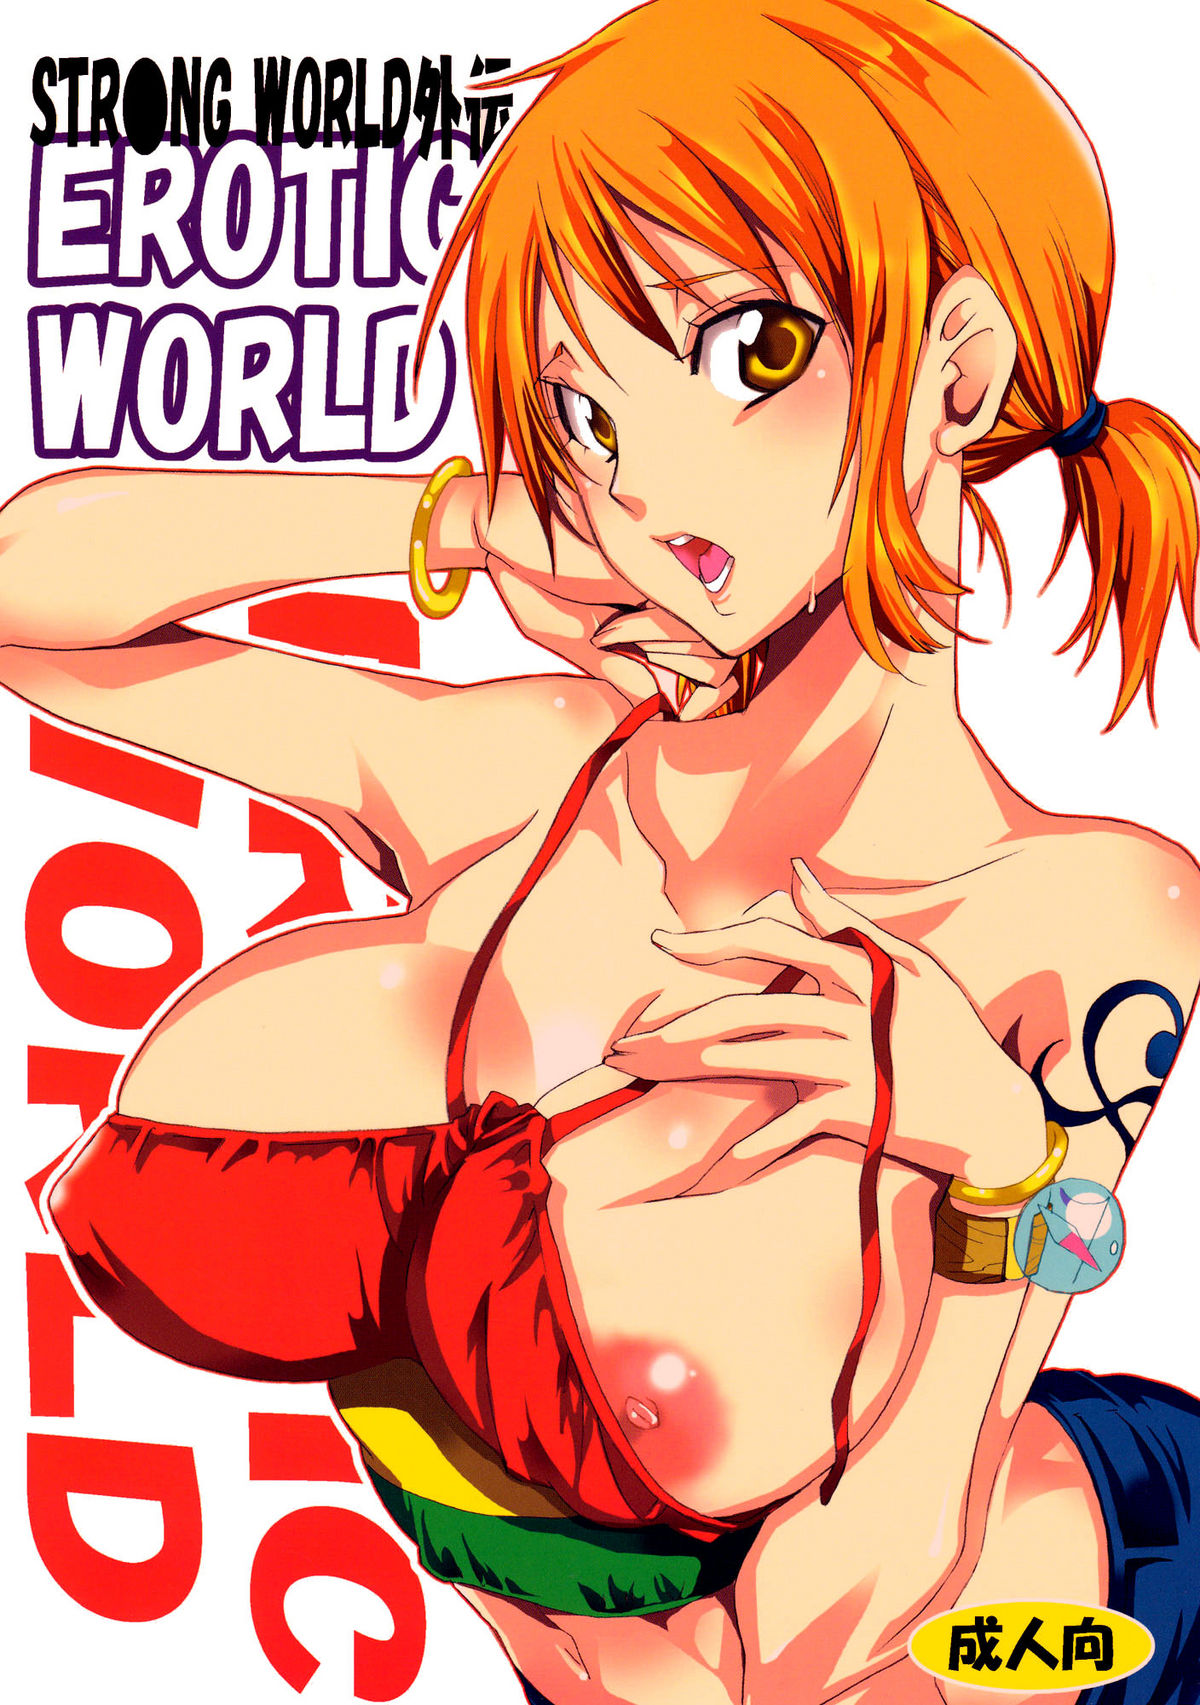 (SC48) [Kurionesha (YU-RI)] Erotic World (One Piece) [German/Deutsch] {Gu-De-Handarbeit.com} (サンクリ48) [くりおね社 (YU-RI)] Erotic World (ワンピース) [ドイツ翻訳]